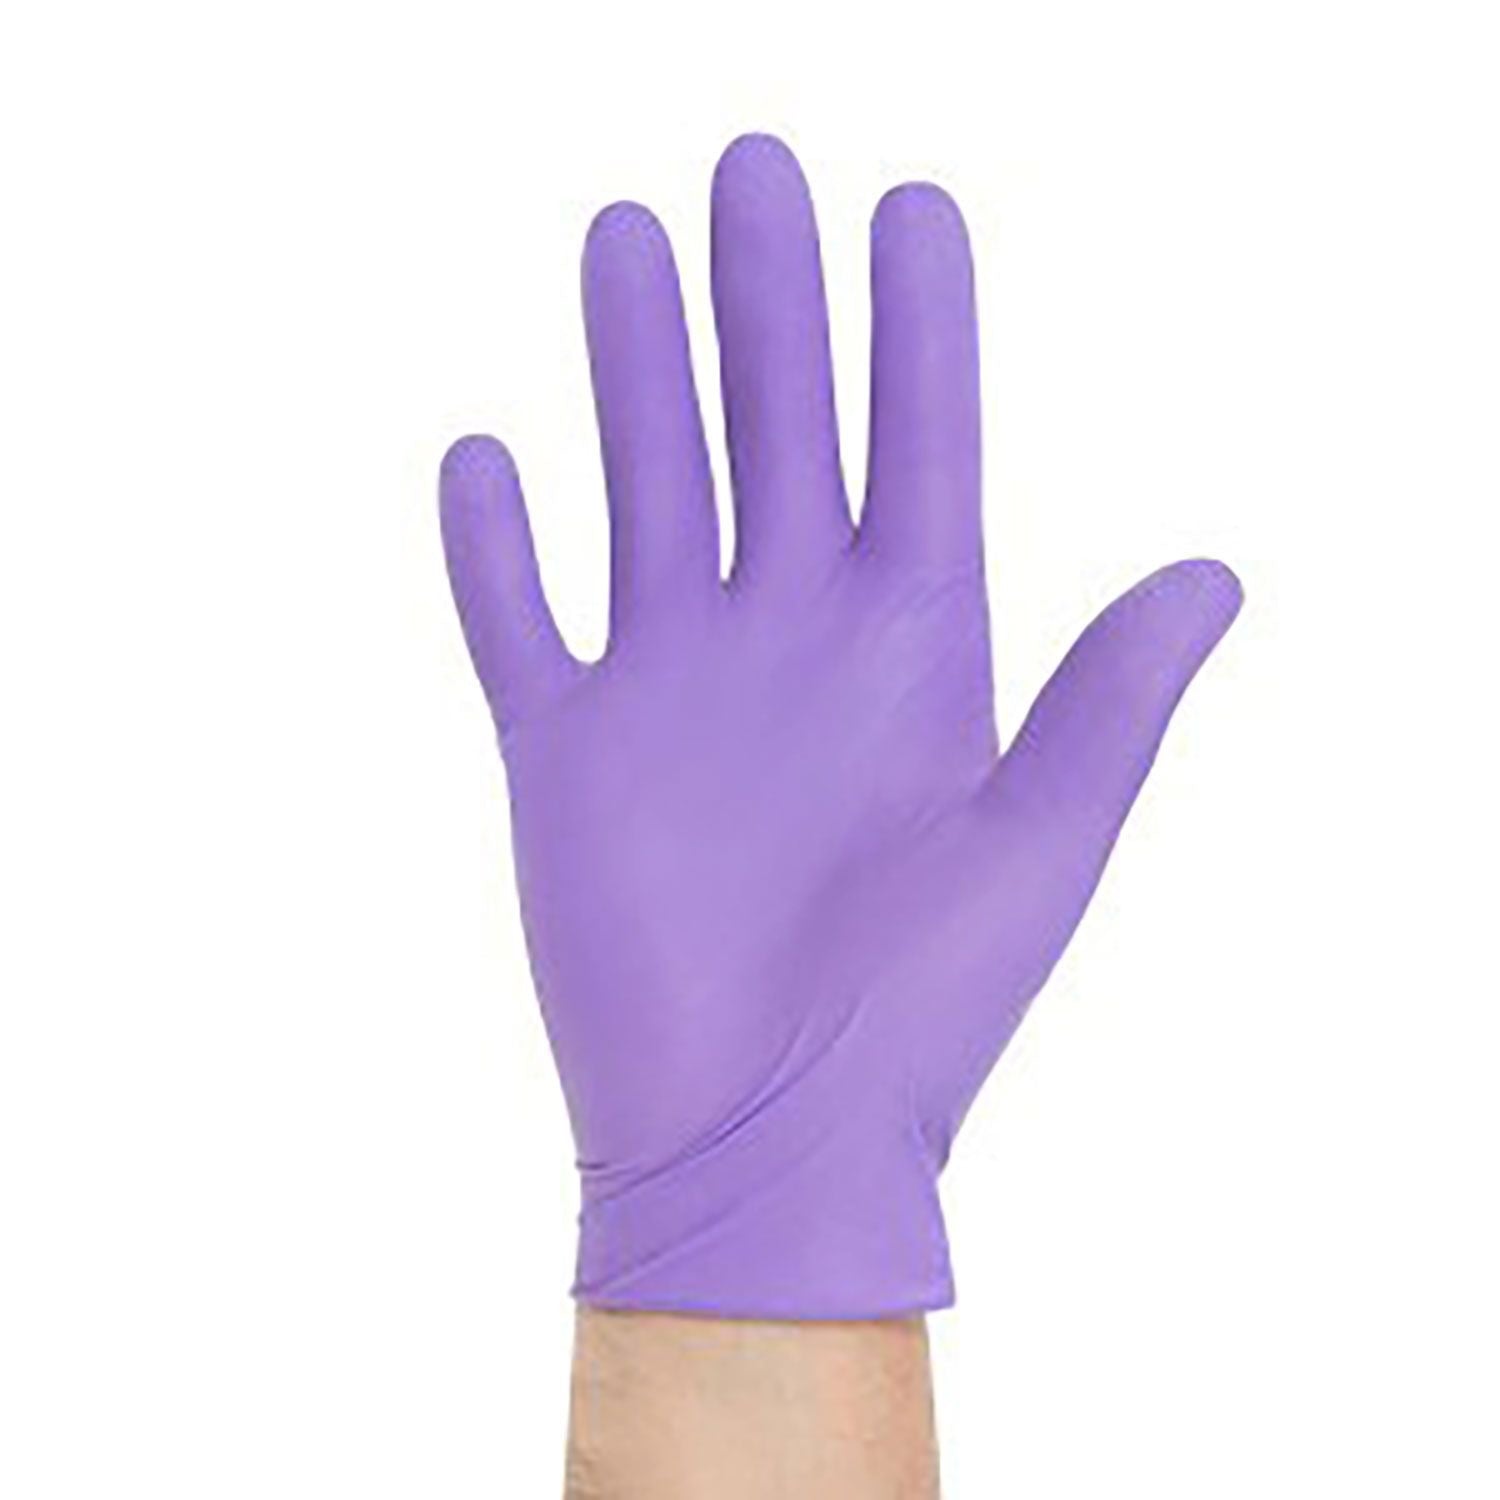 Halyard Purple Nitrile Powder Free Xtra Exam Gloves | Pack of 50 Pieces